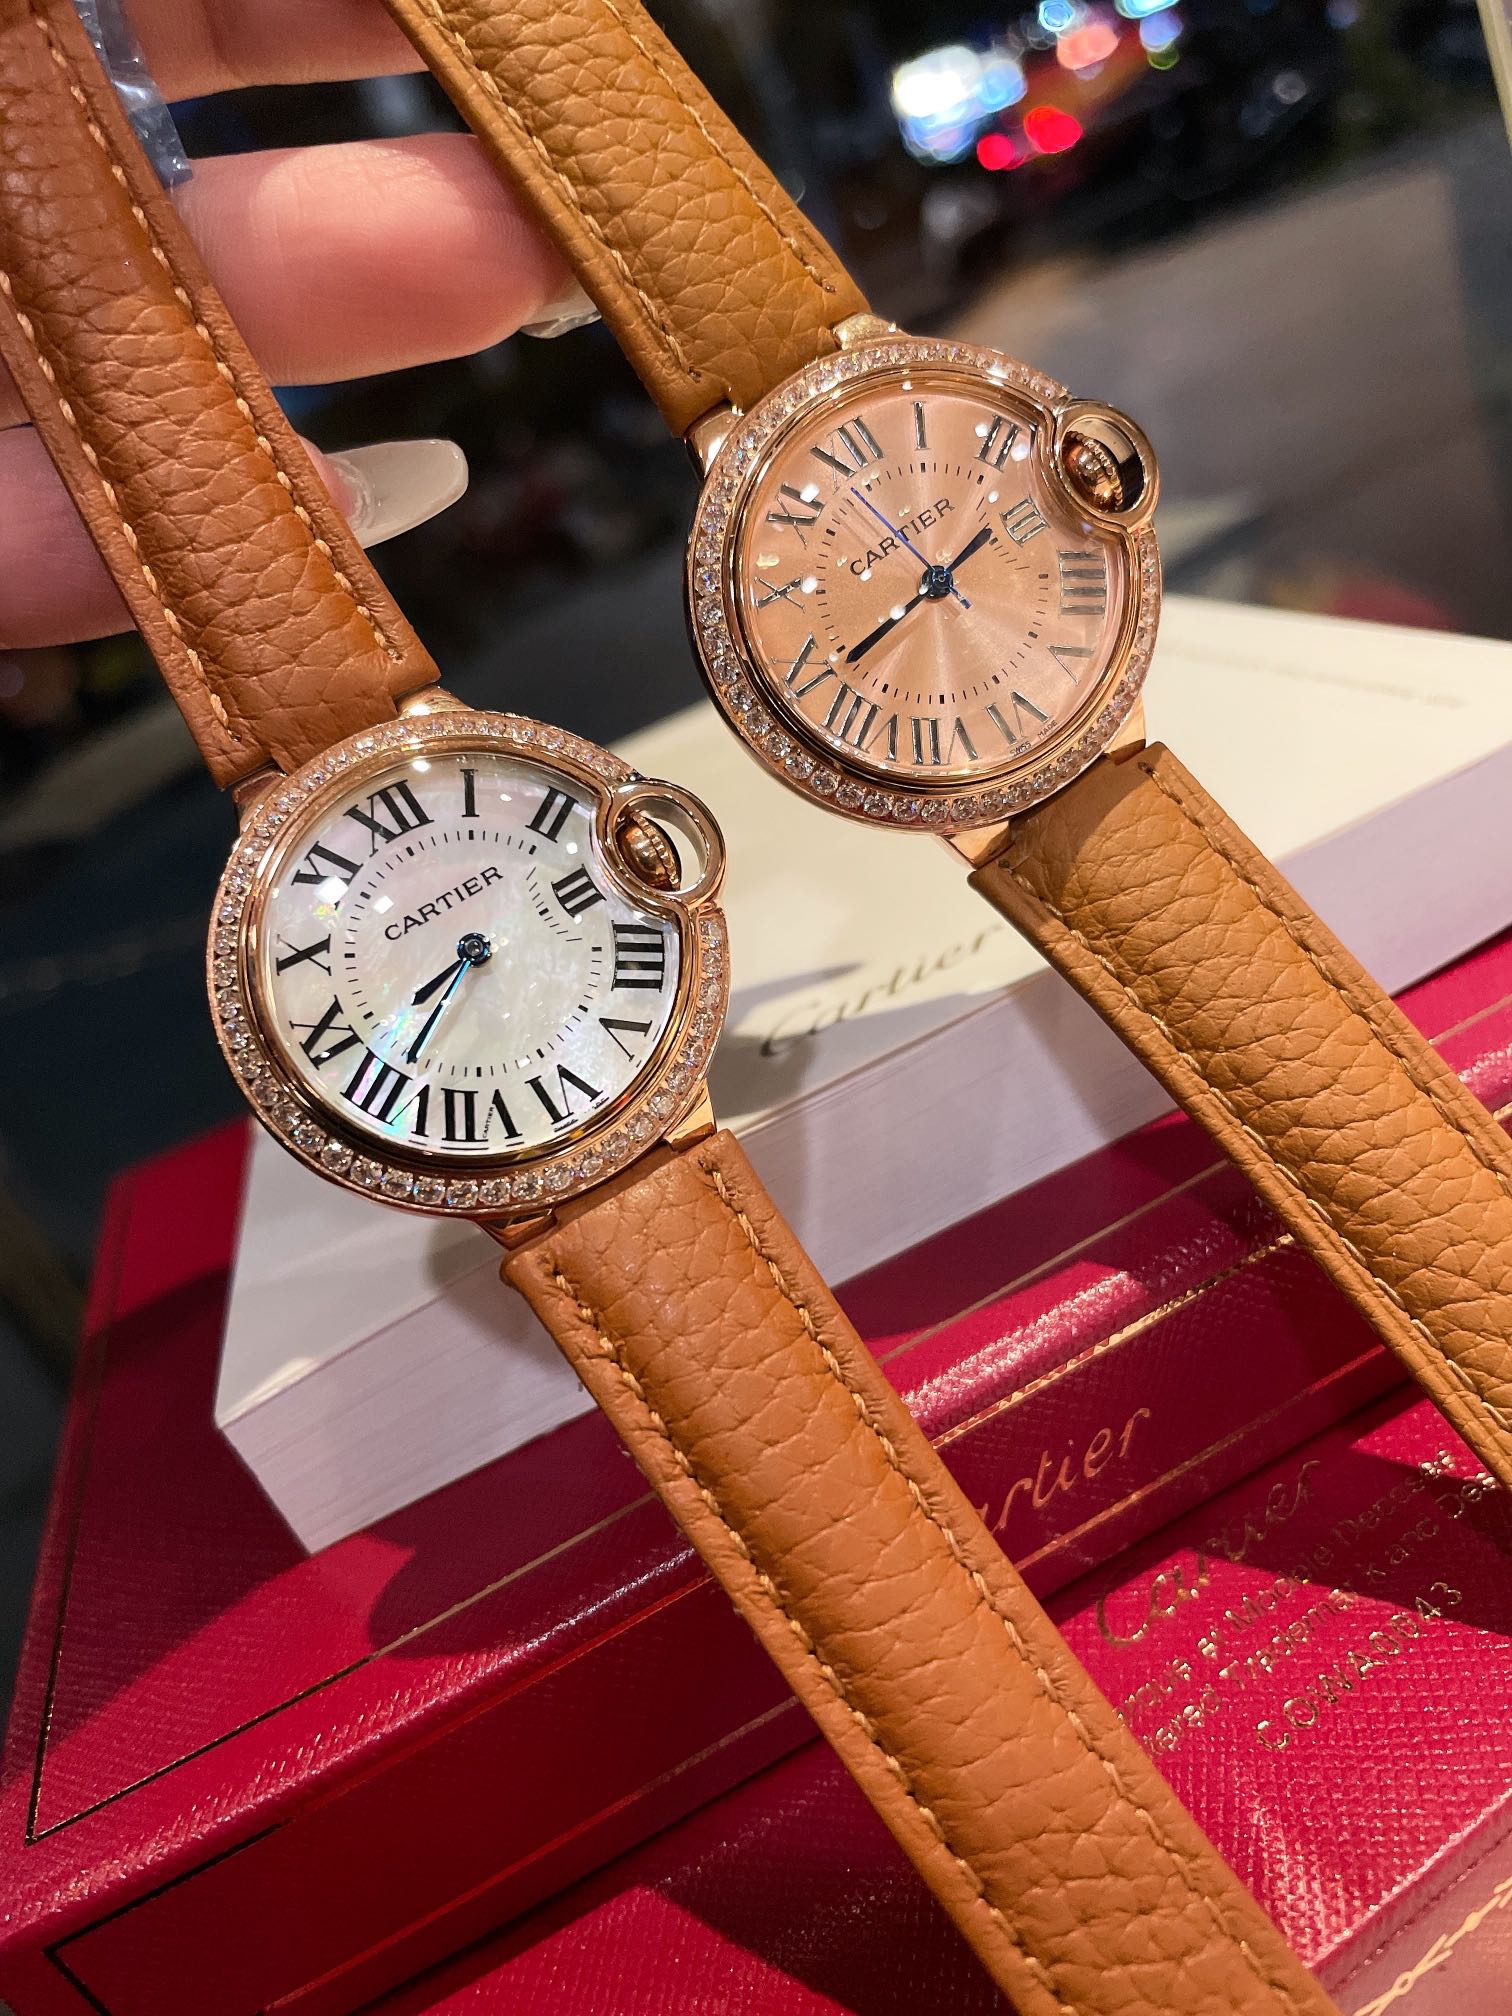 CARTIERカルティエ 腕時計 並行輸入コピー フランス 薄い腕時計 レザー 水晶ダイヤモンド 新商品 限定品 ブラウン_1